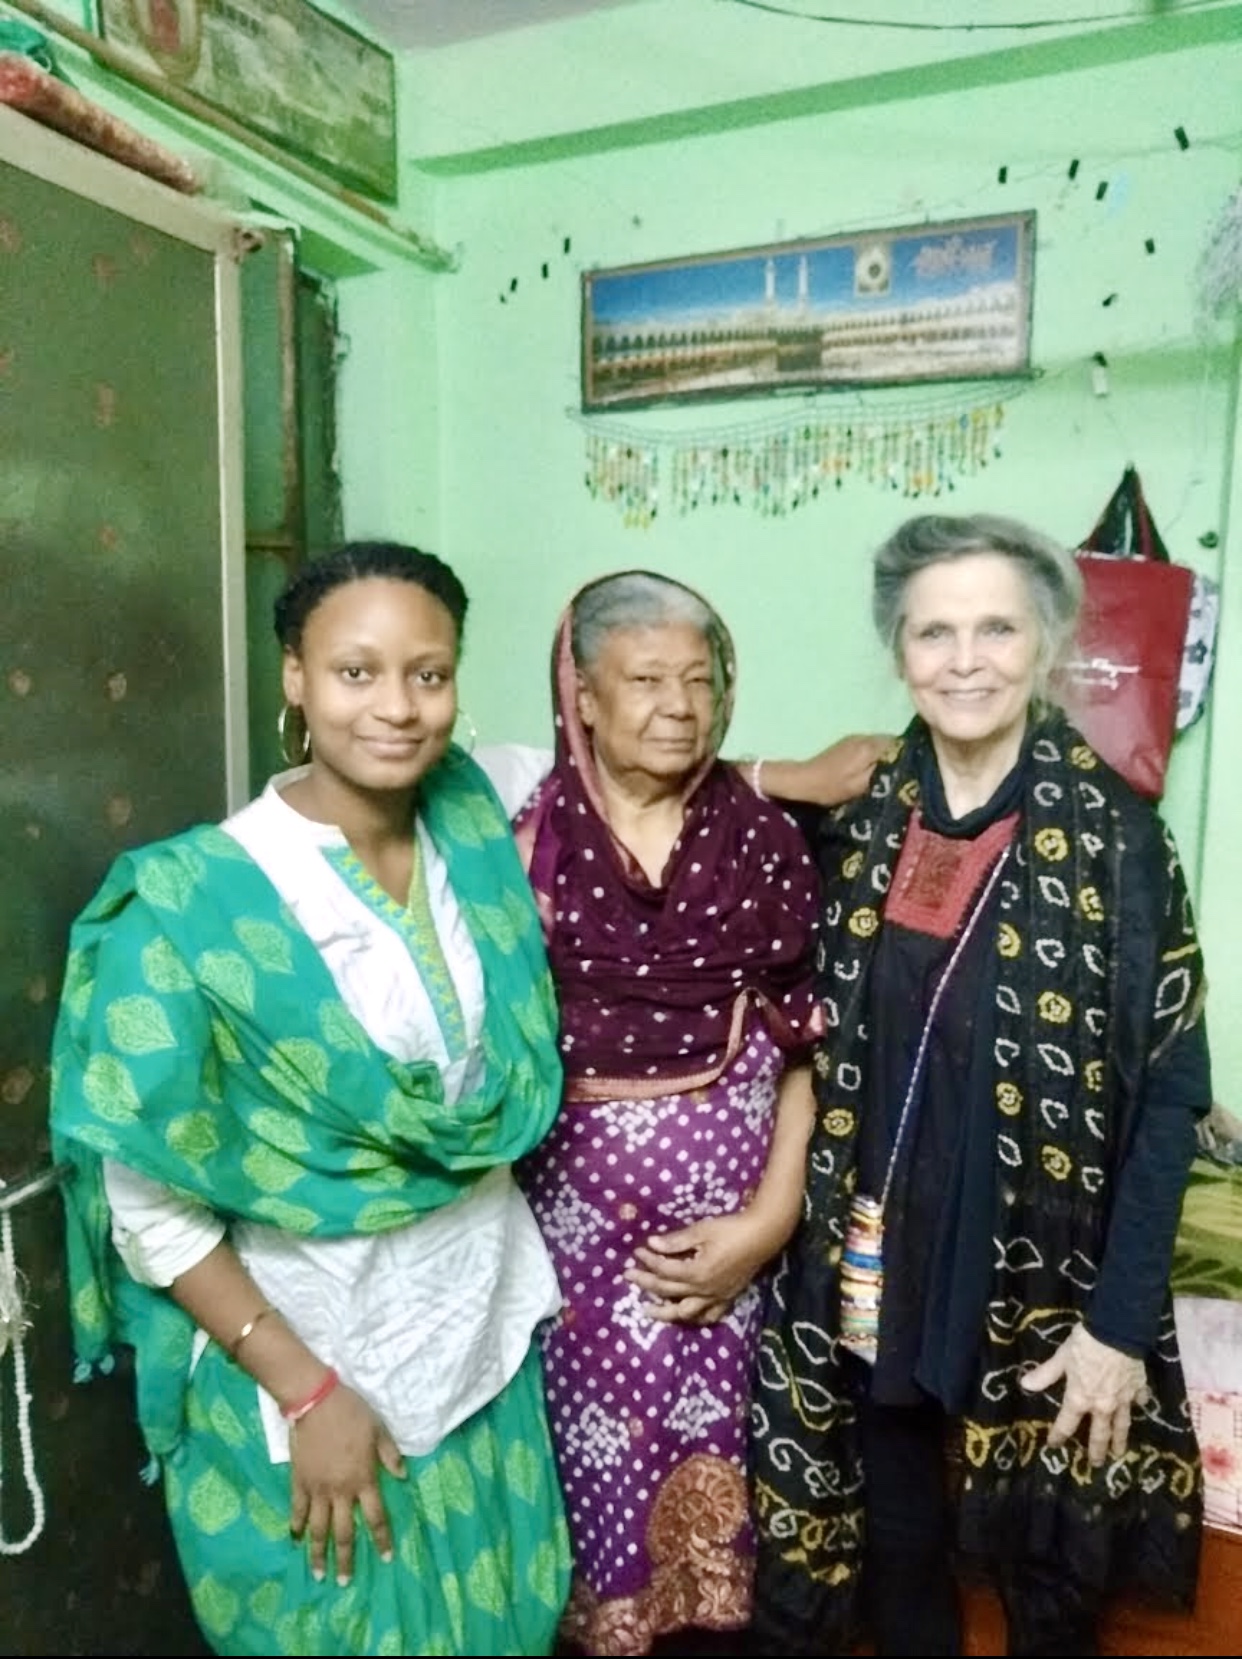 From Left to Right: Jazmin Graves; Rumanaben Sidi, respected elder and ritual specialist in Ahmedabad; Amy Catlin Jairazbhoy (UCLA), ethnomusicologist and dissertation adviser.